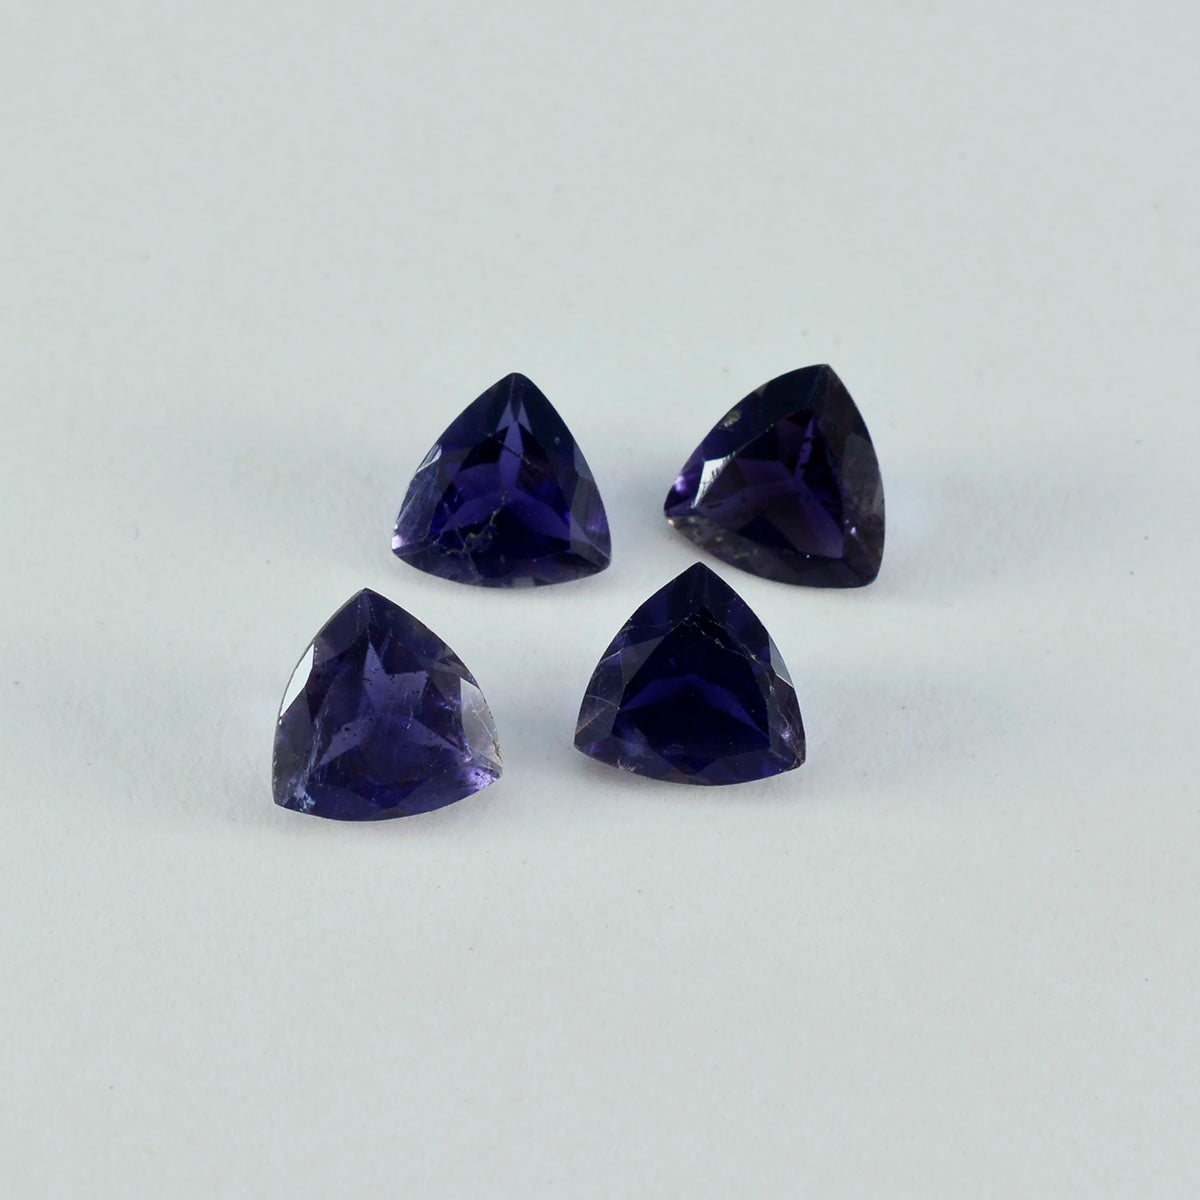 Riyogems 1PC Blue Iolite Faceted 14x14 mm Trillion Shape wonderful Quality Loose Stone